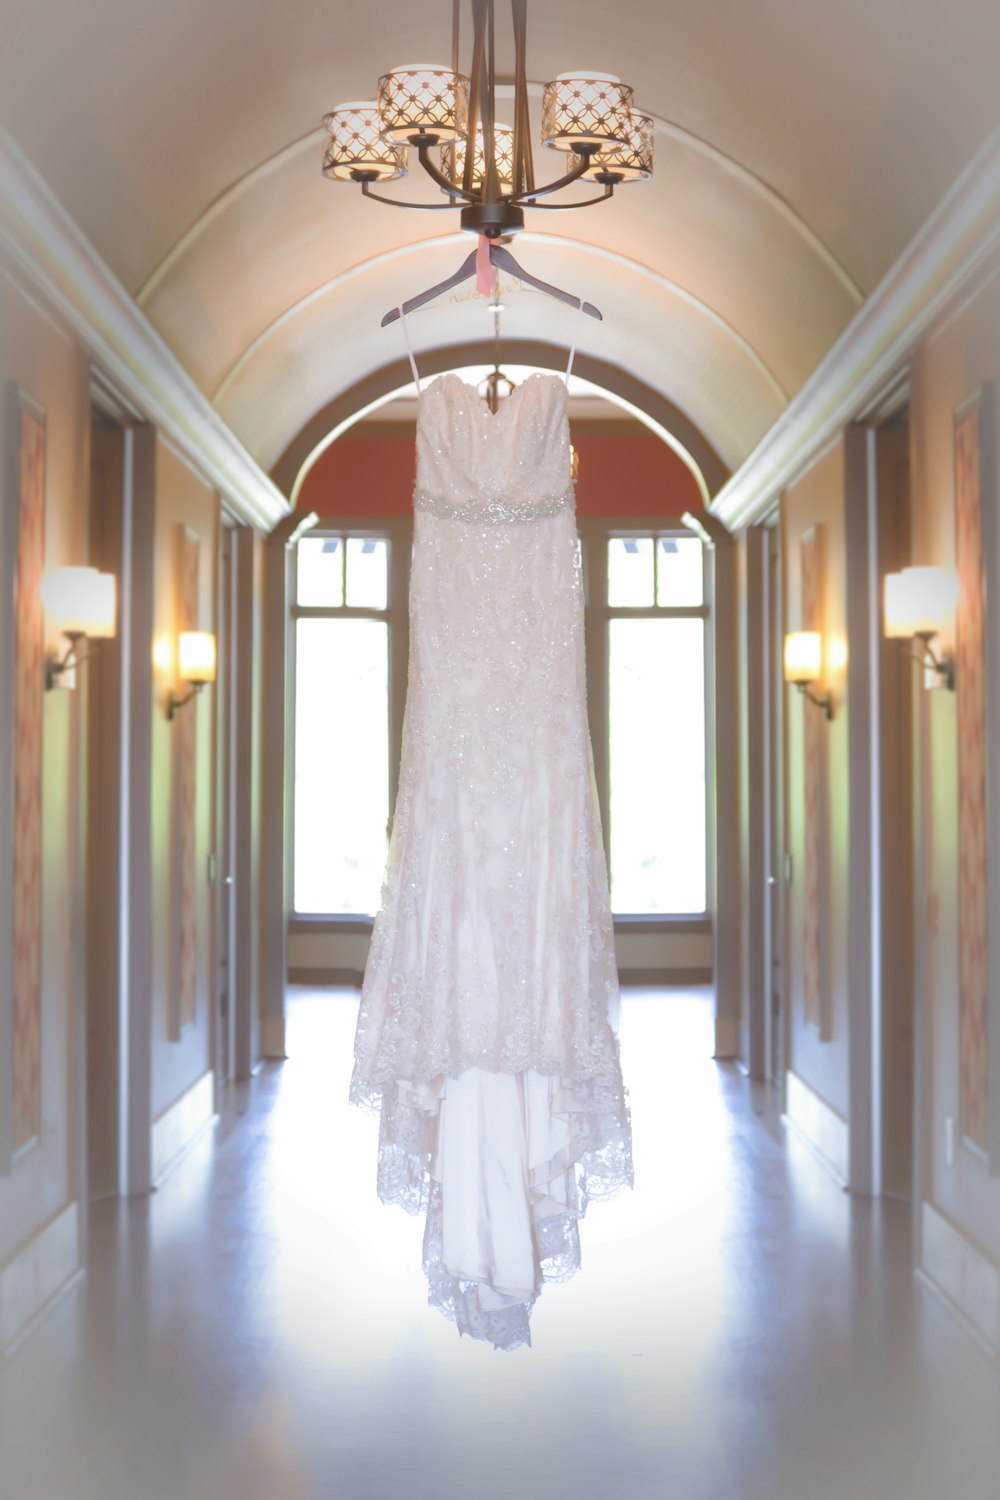 white spaghetti strap dress hang on chandelier